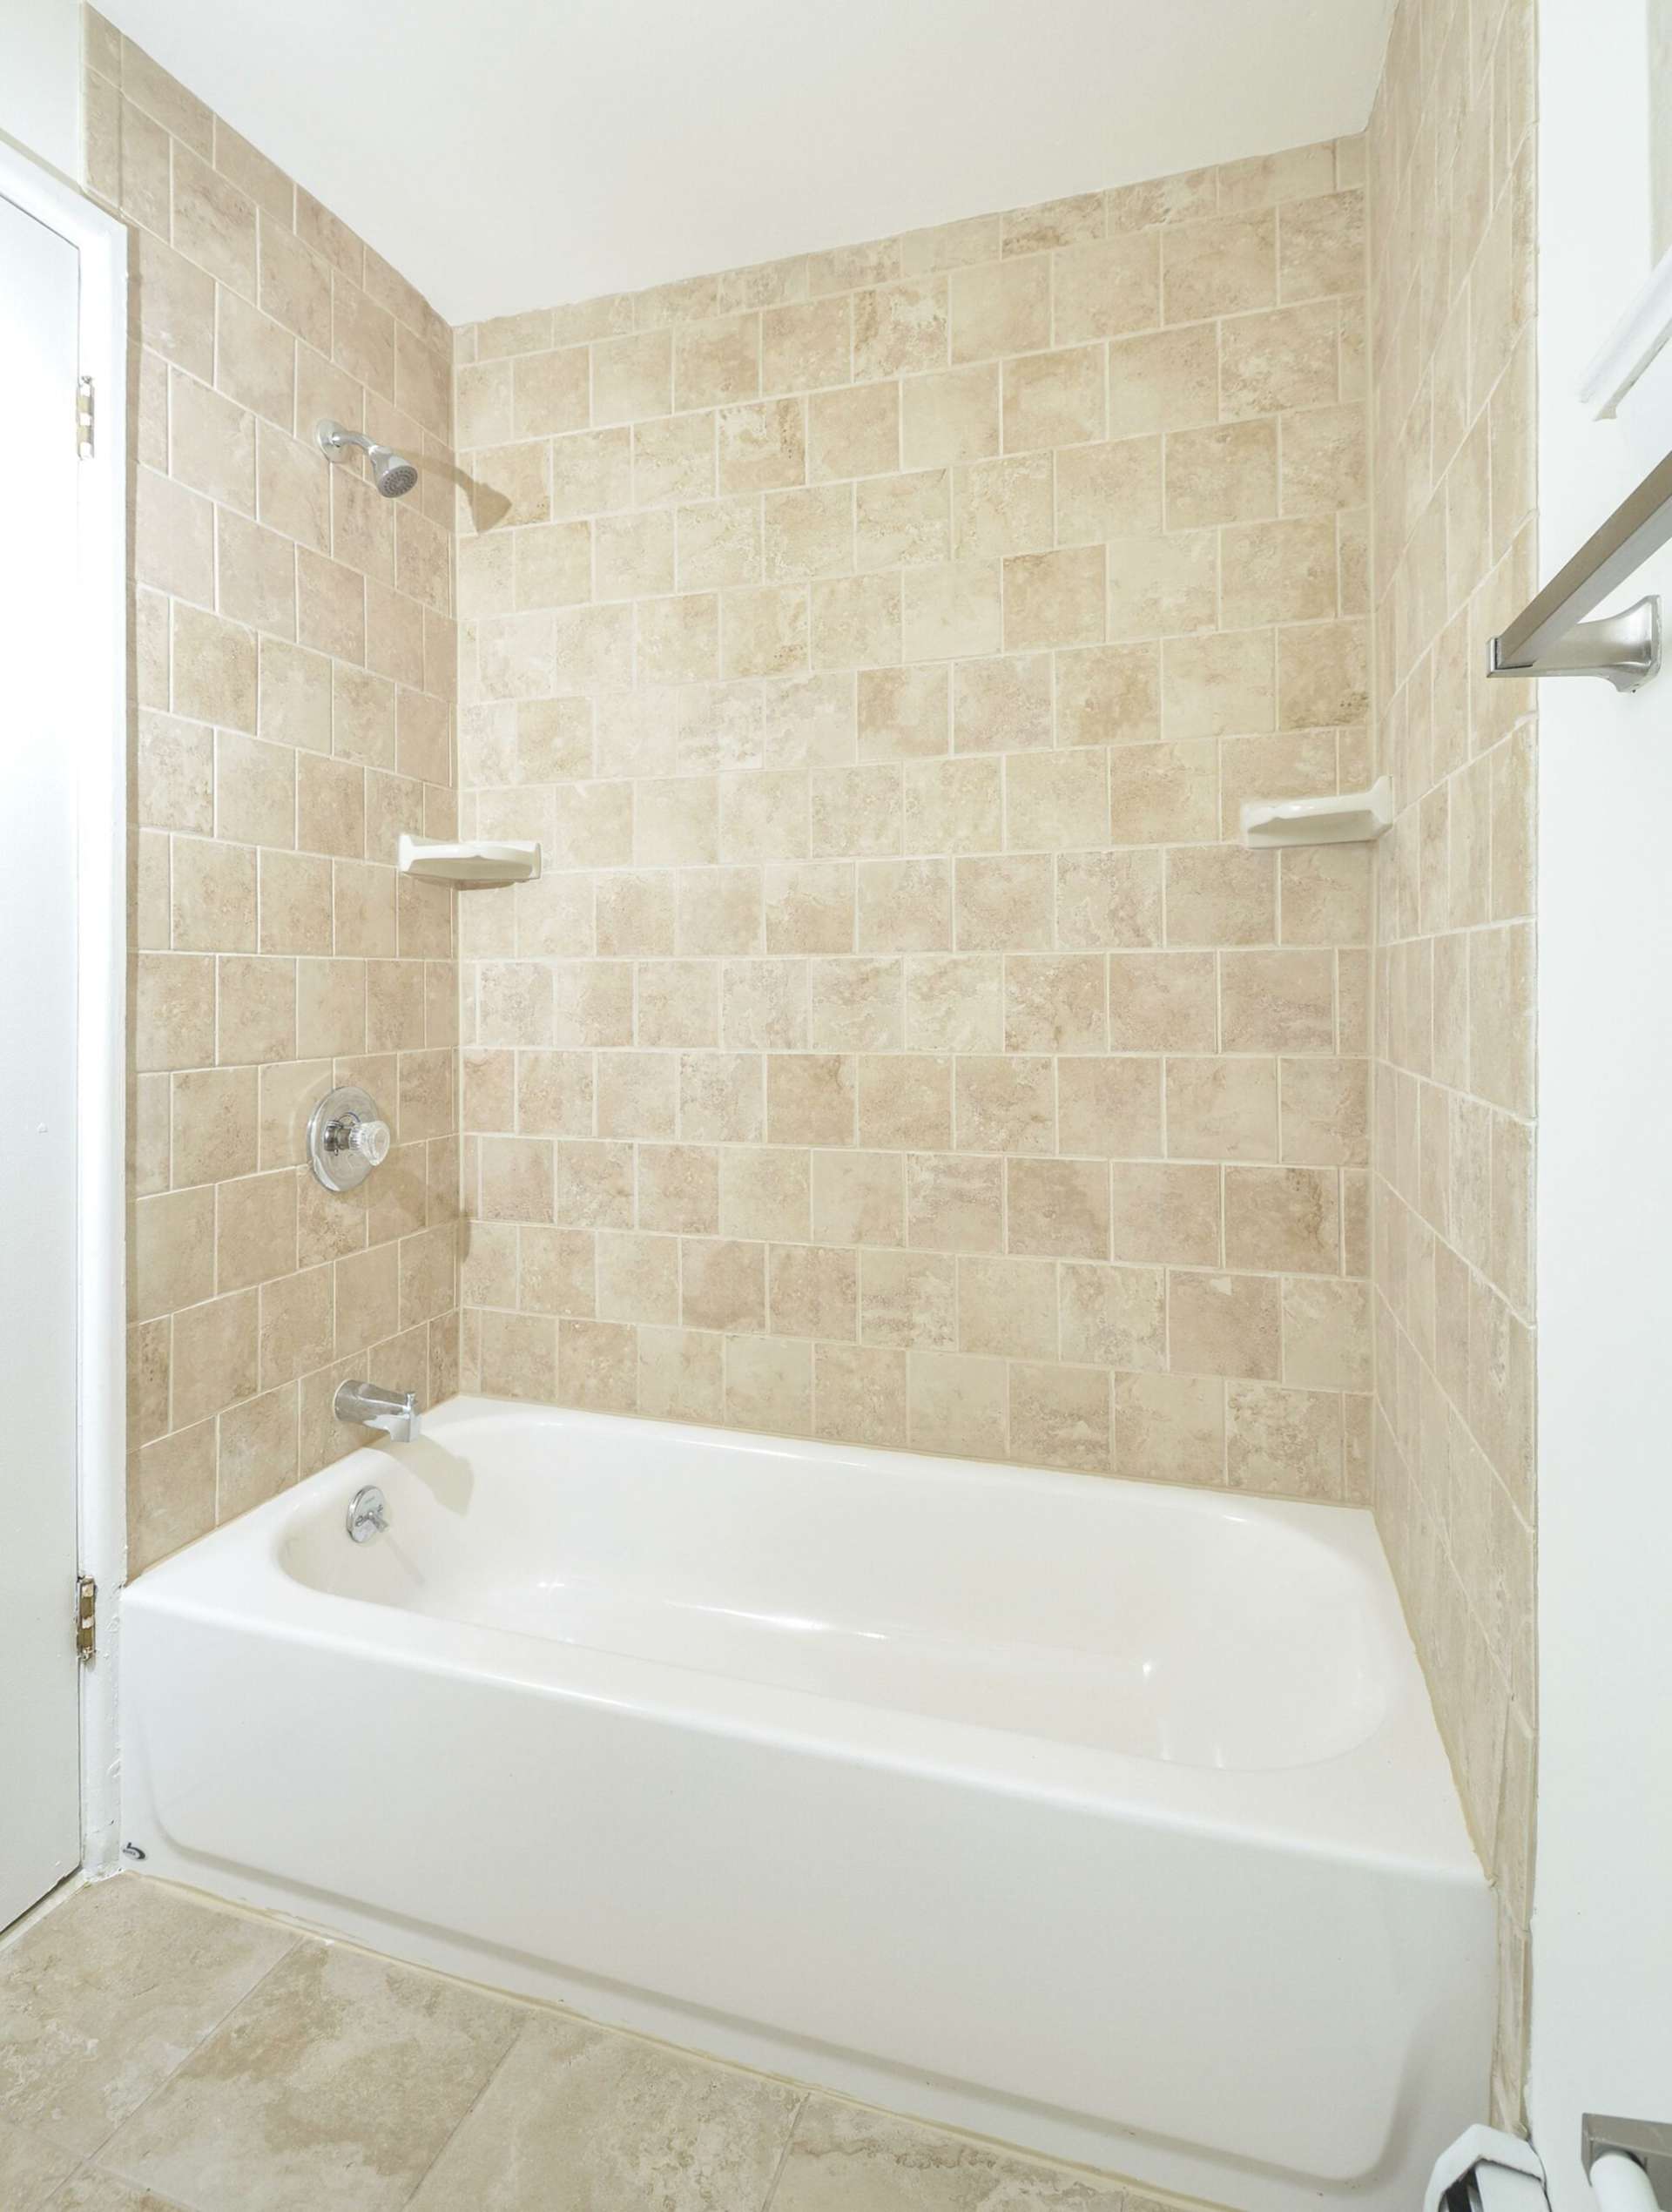 Bathtub with light brown tiles in a bathroom.